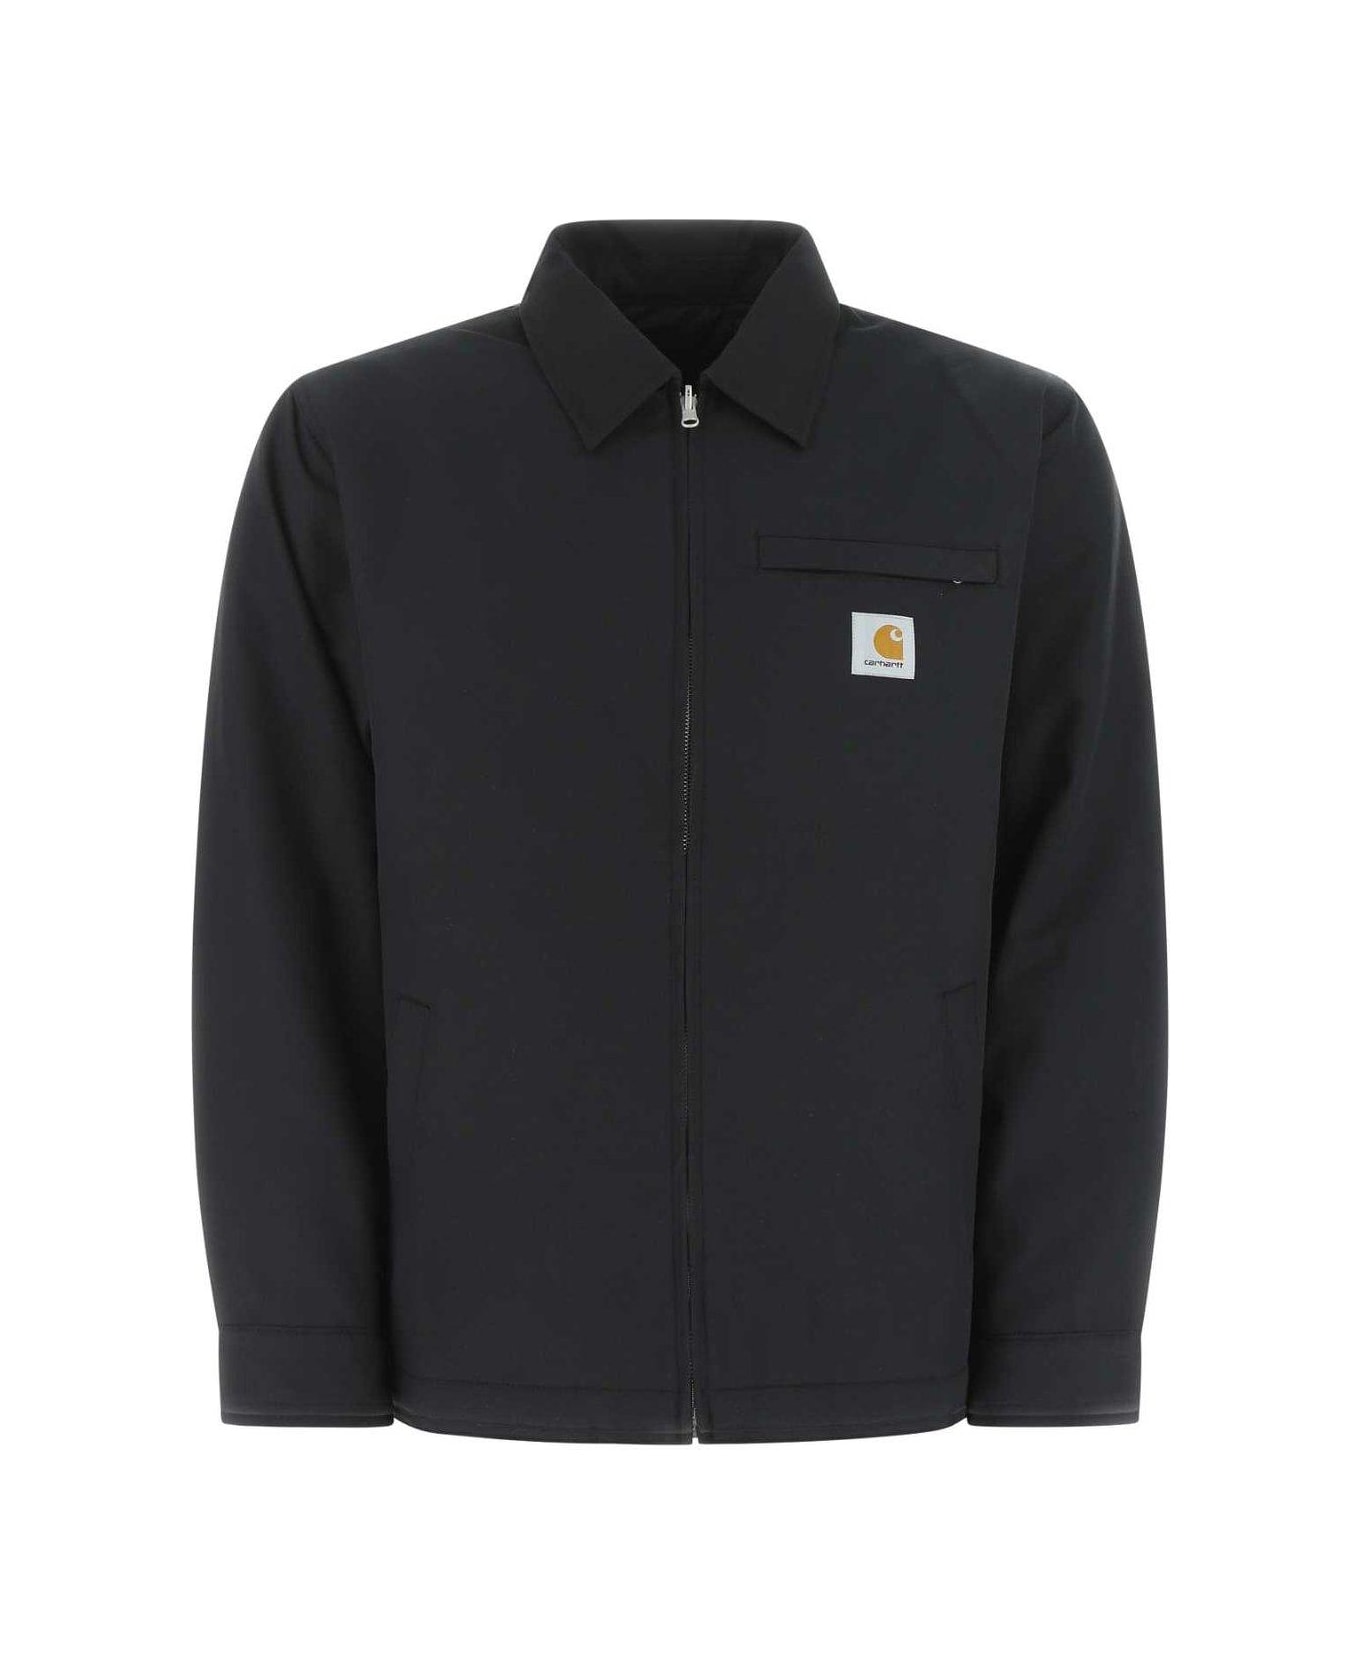 Carhartt Zip-up Long-sleeved Jacket - Nero/bianco